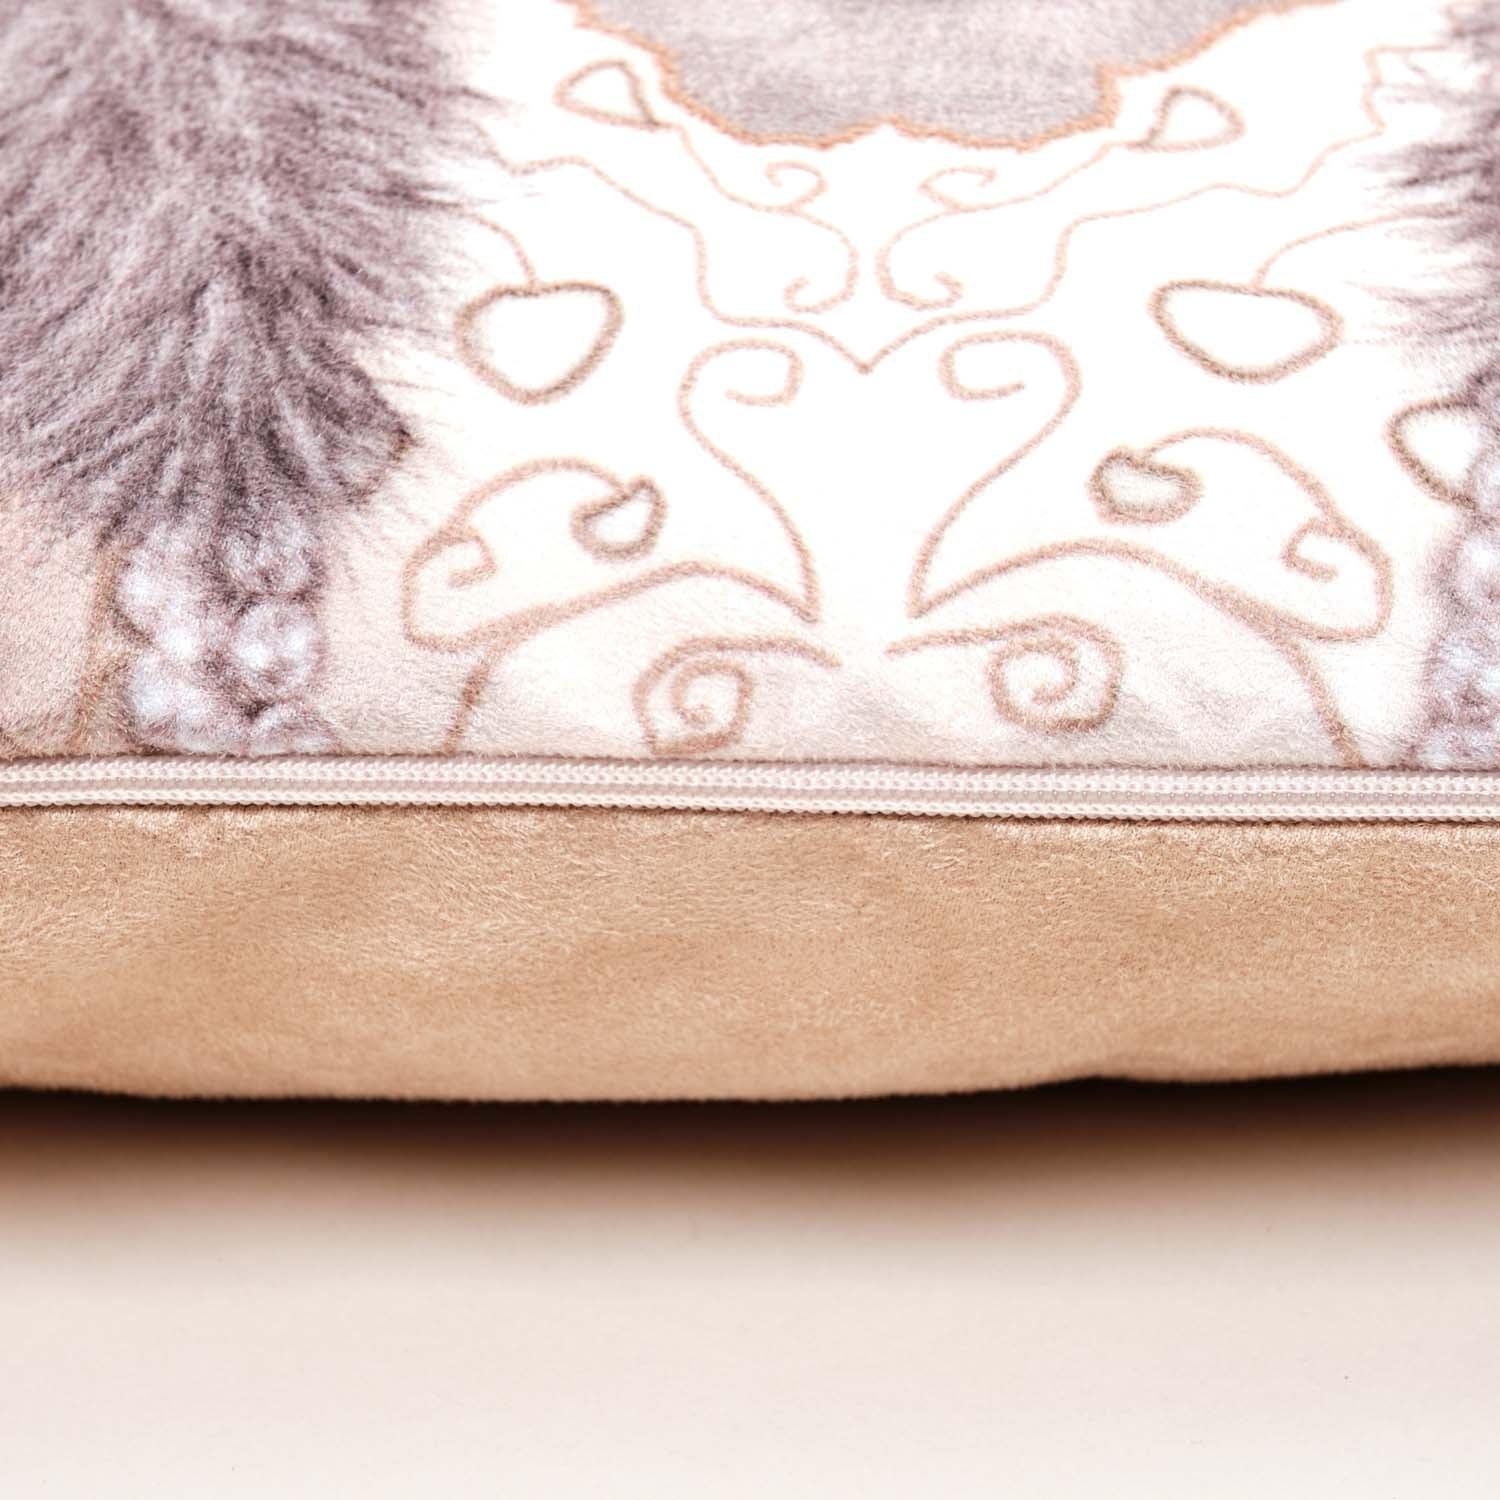 Paris - Pets Rock Cushion - Handmade Cushions UK - WeLoveCushions